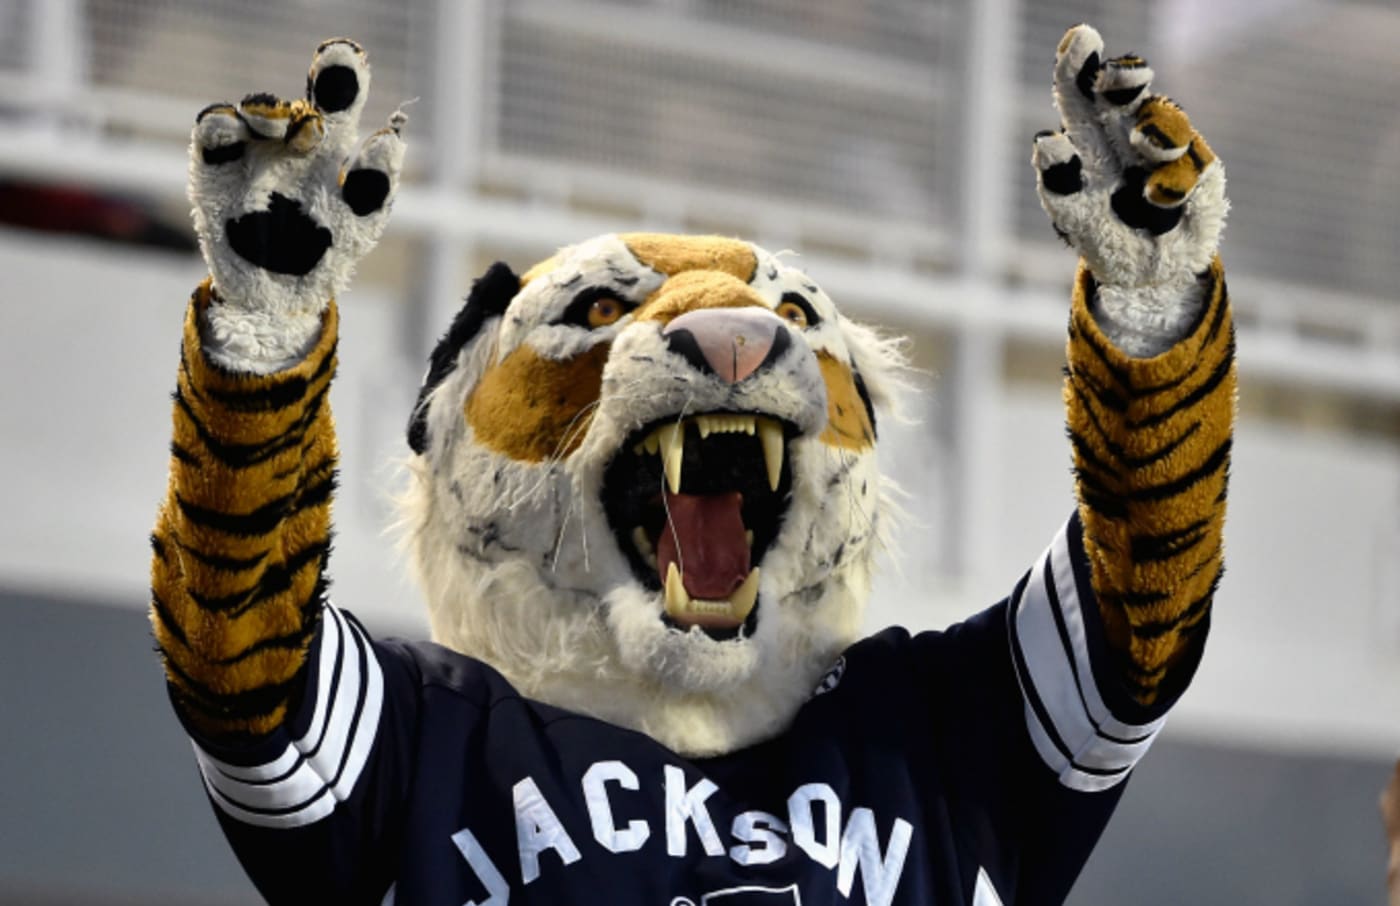 The Jackson State Tigers mascot Wavee Dave cheers